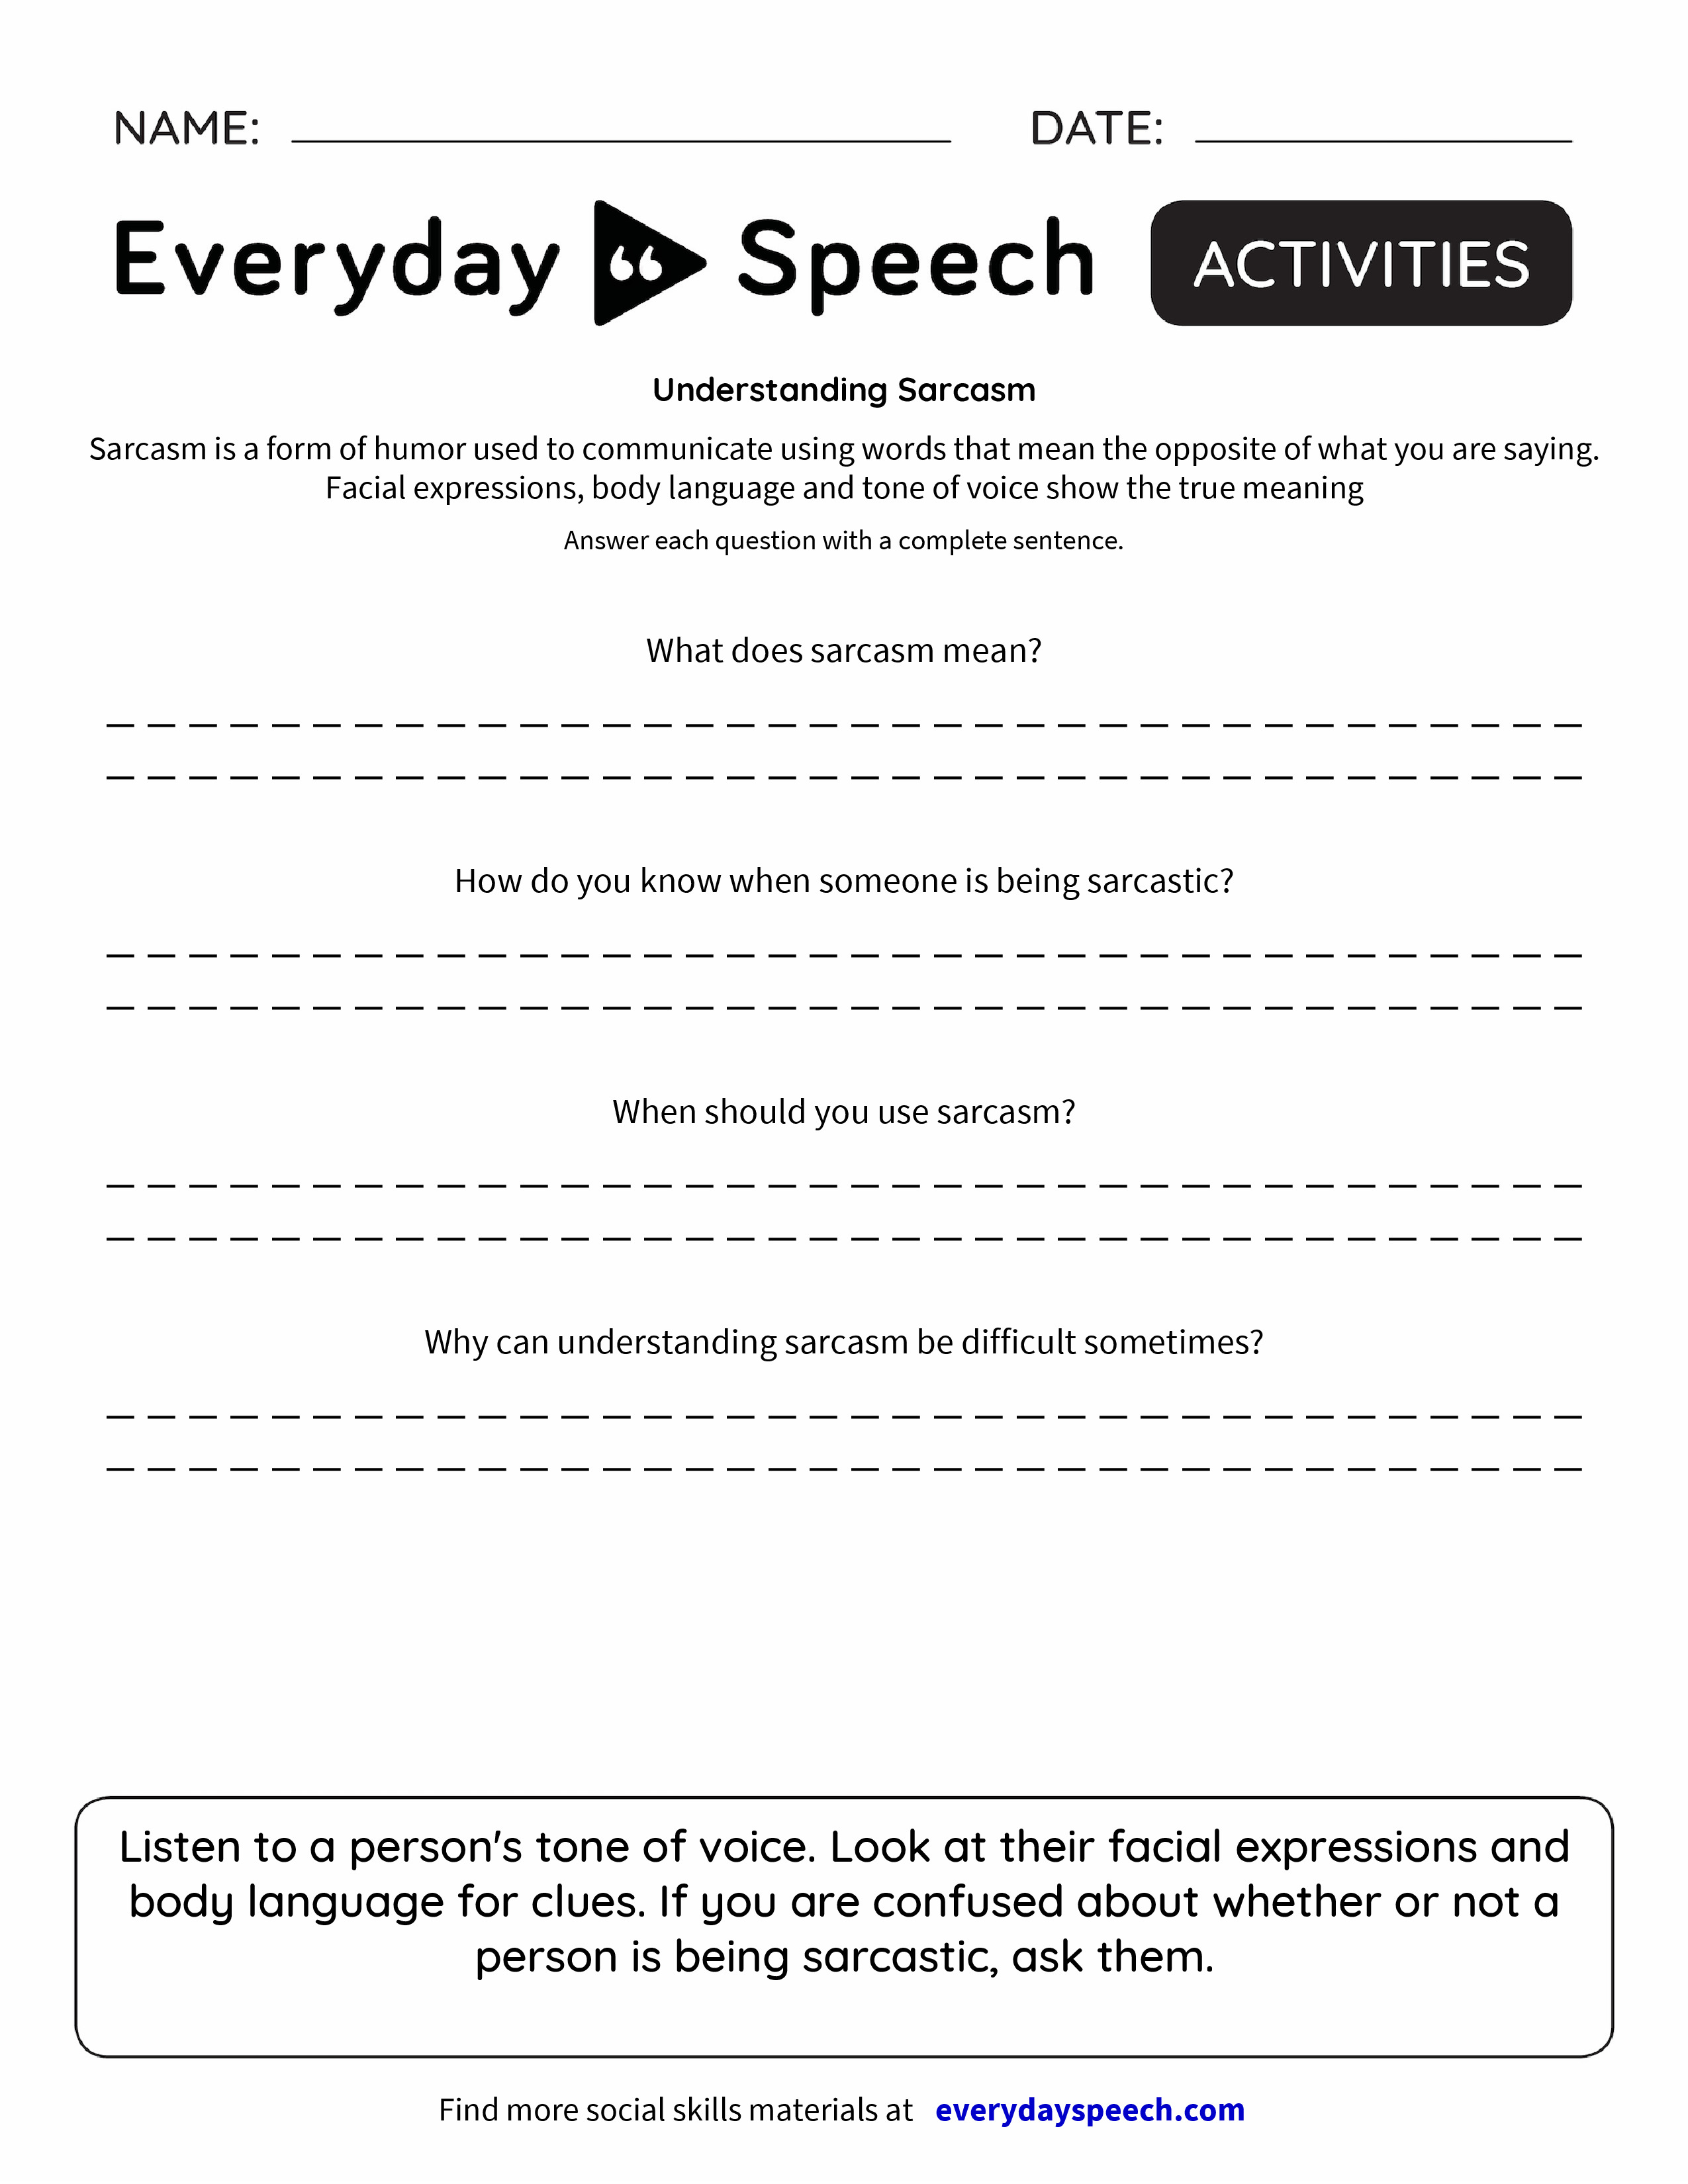 understanding-sarcasm-everyday-speech-everyday-speech